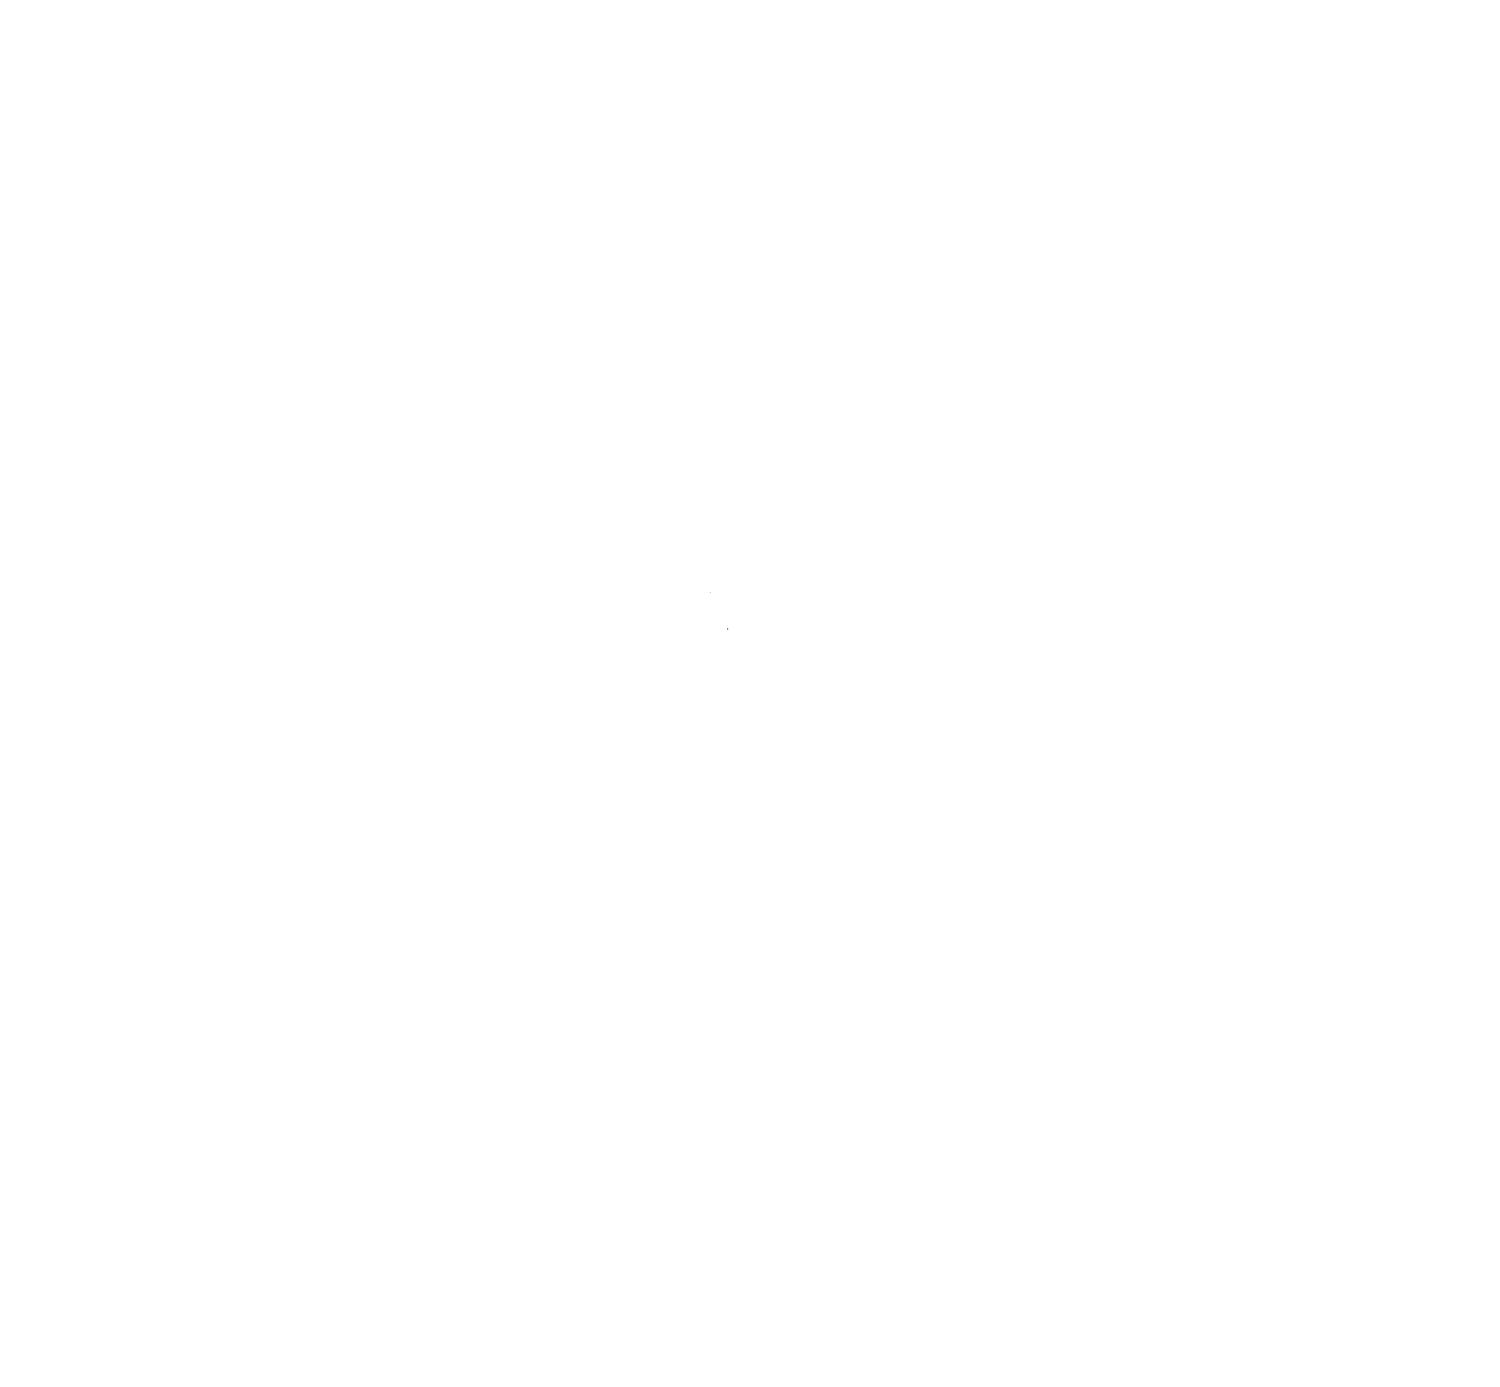 Cincy Design-Build